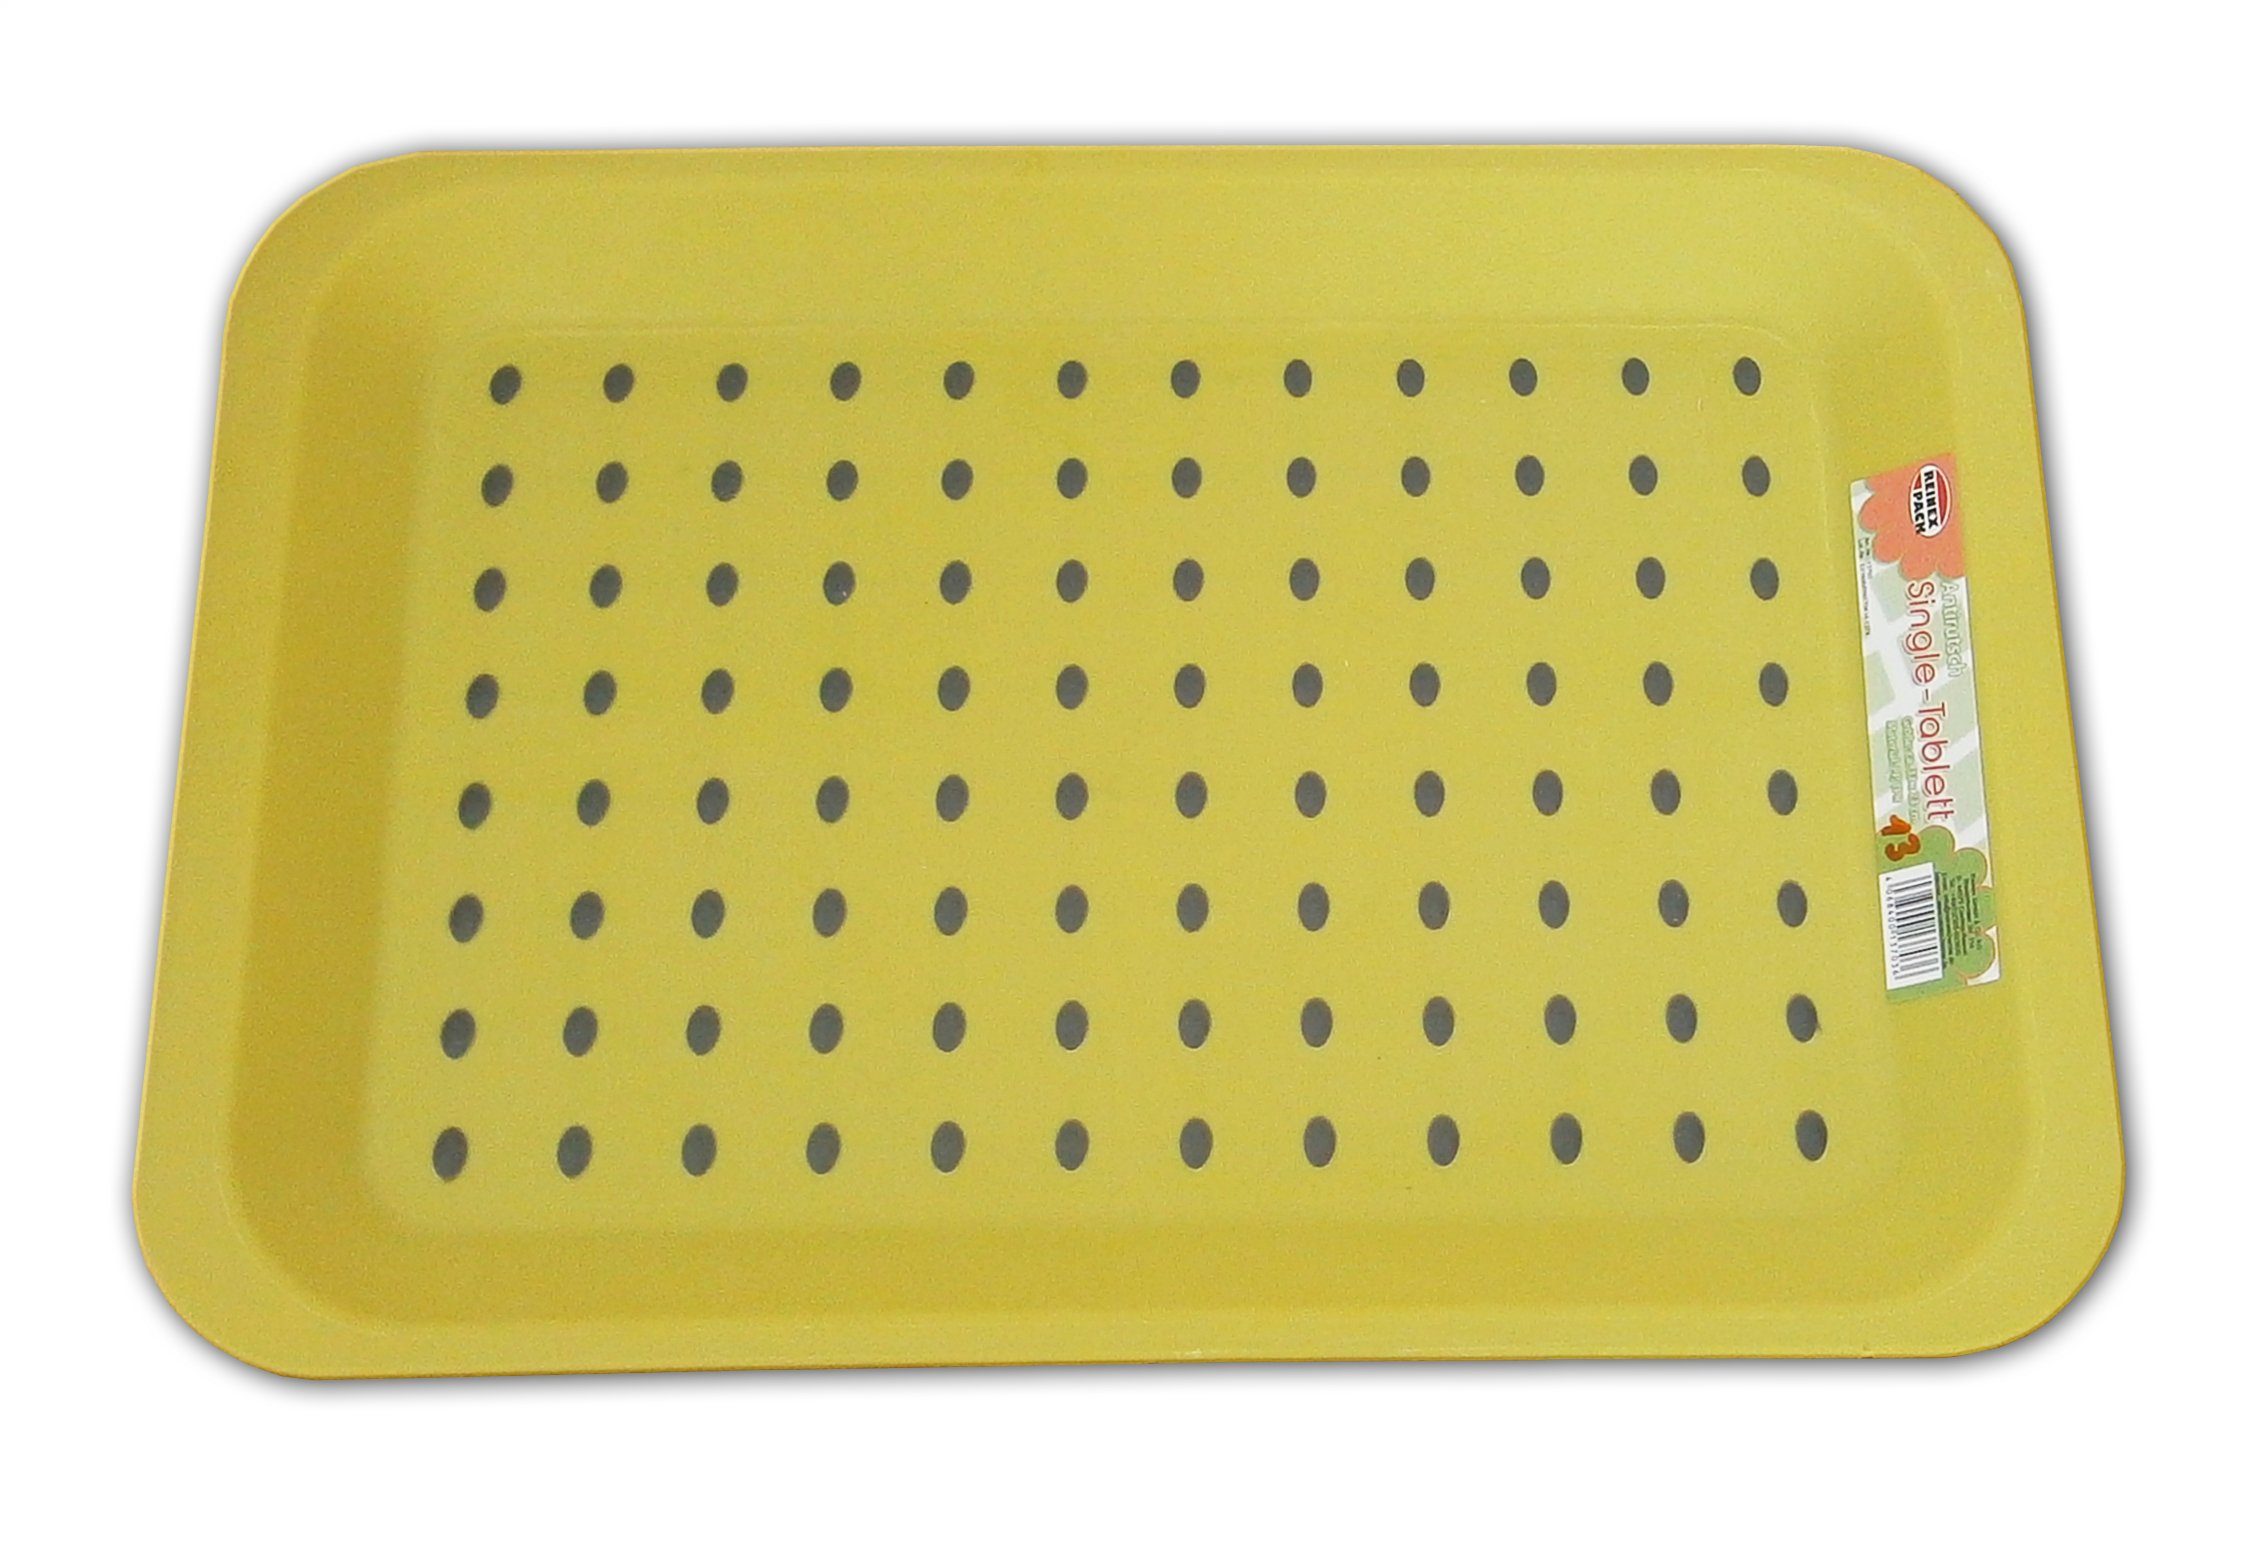 Frühstückstablett Grün mit TABLETT (Grün) Kunststoff Serviertablett 36 Reinex Anti-Rutsch-Belag 33x23cm Tablett